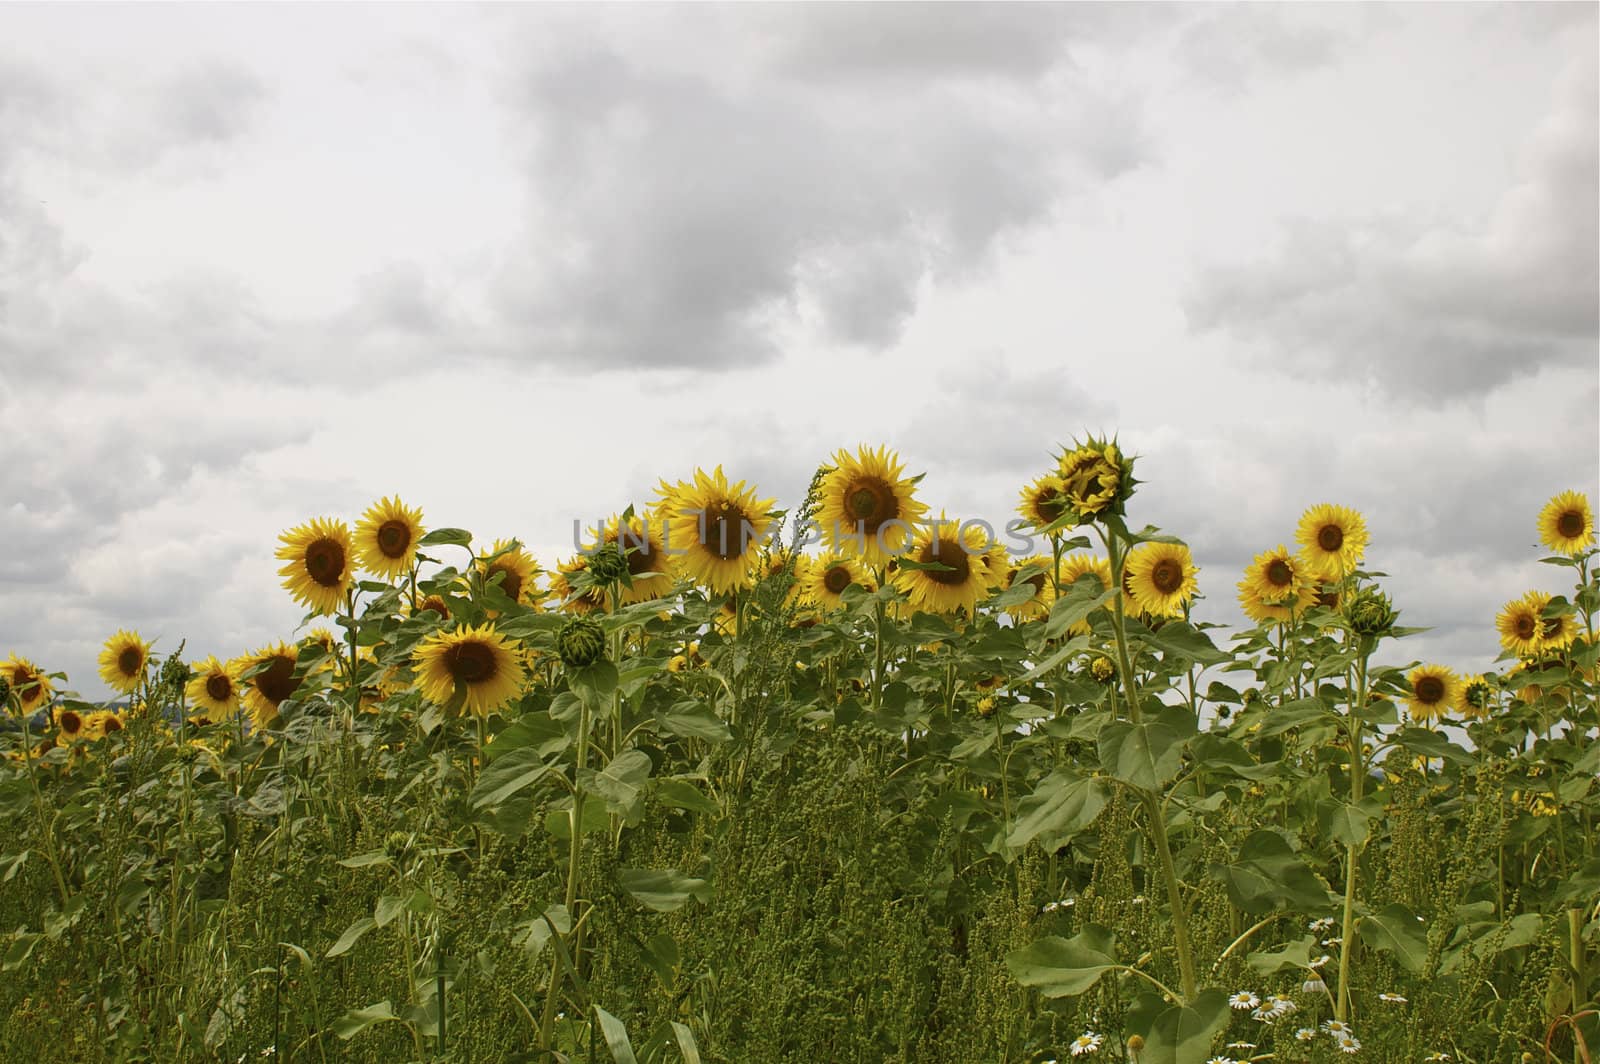 Sunflowers by PrincessToula